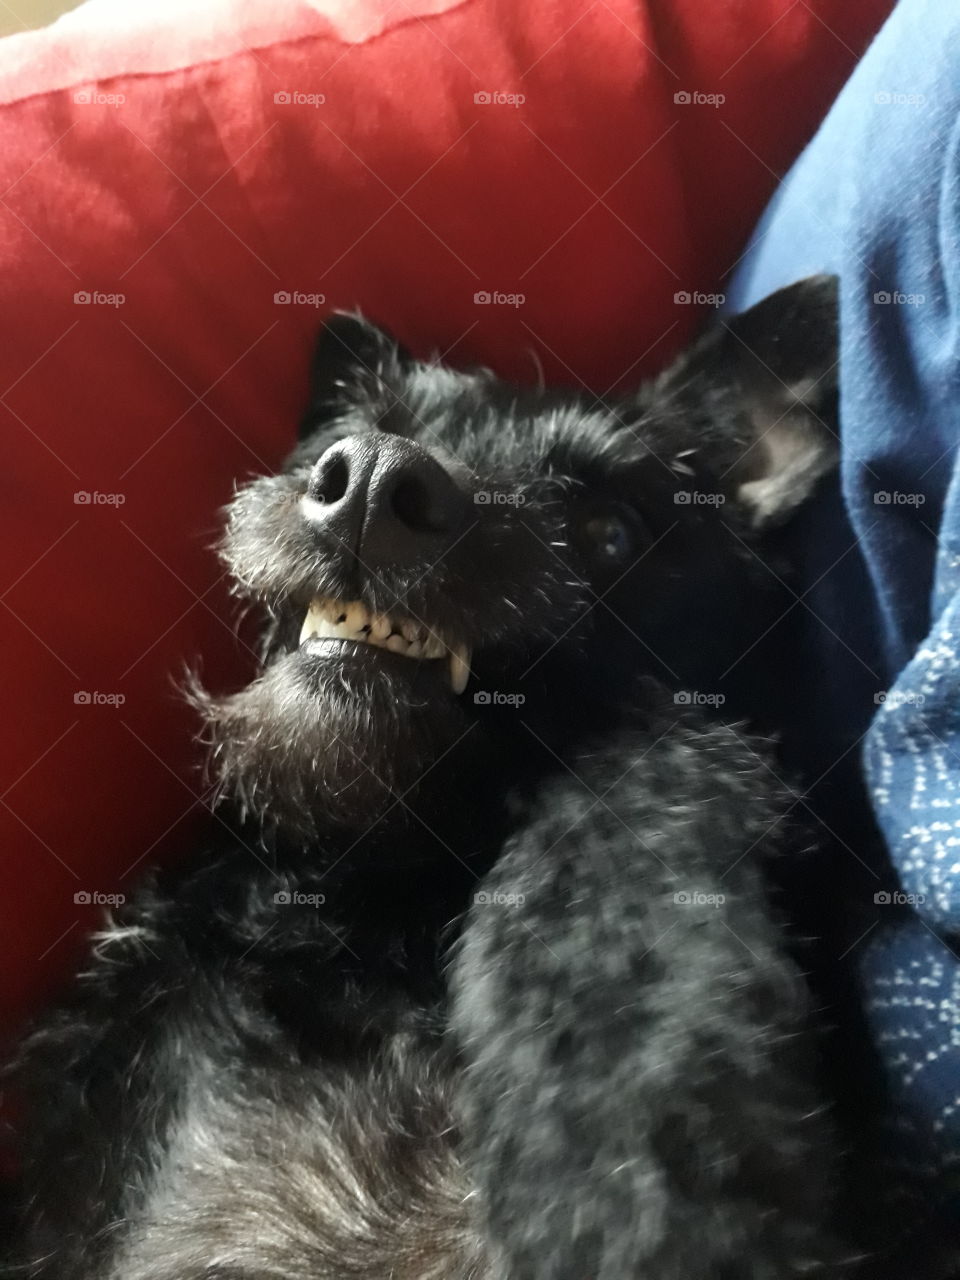 my dog's smile